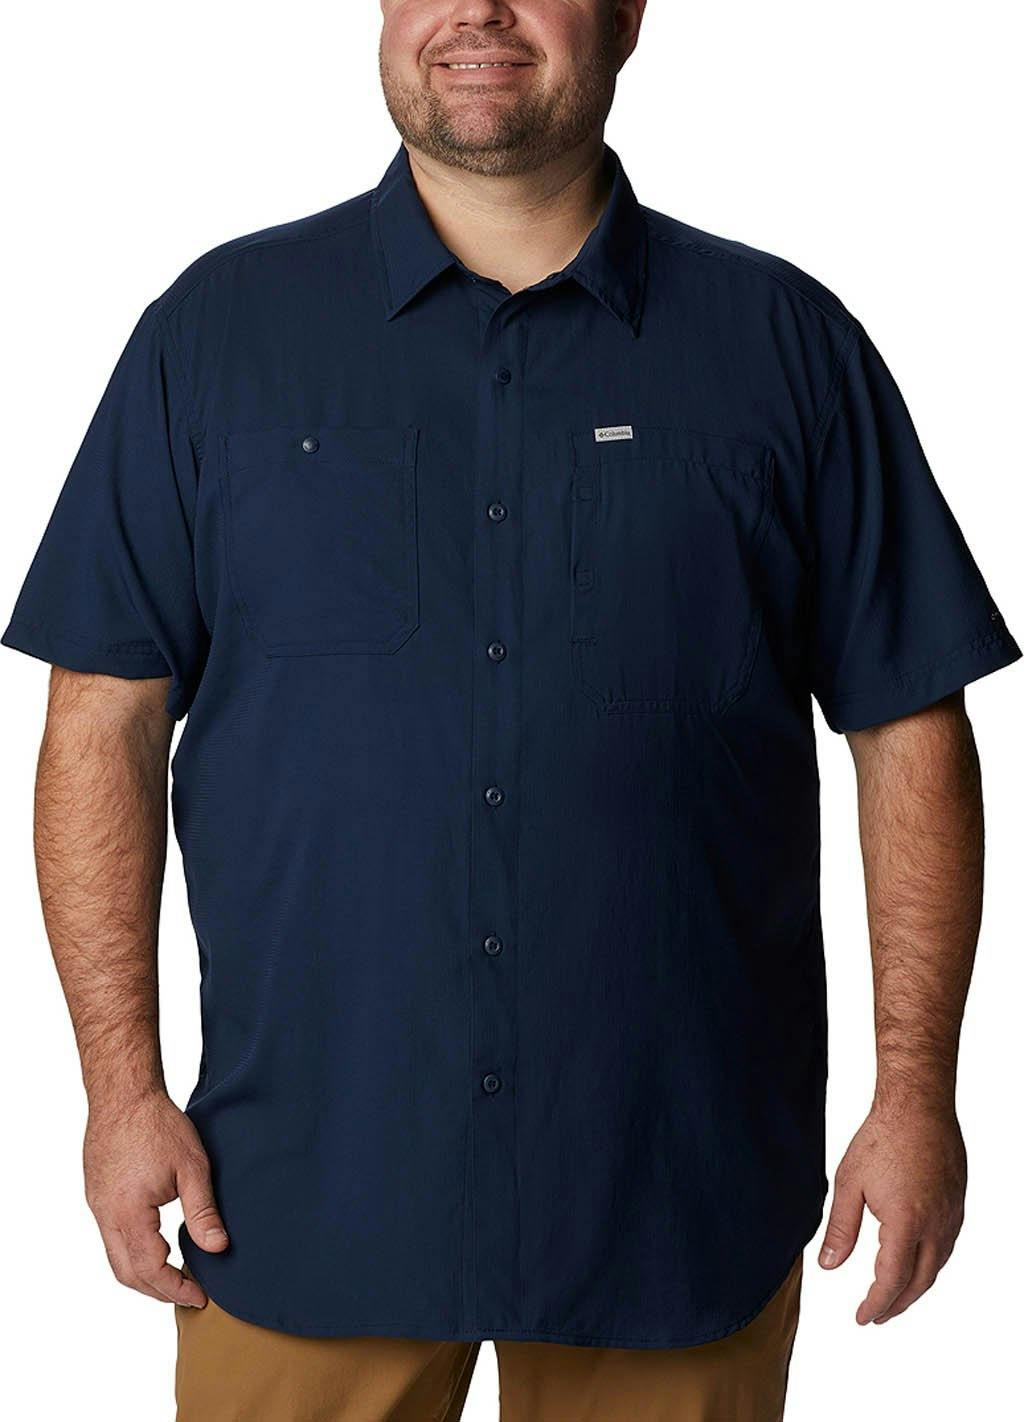 Product image for Silver Ridge™ Utility Lite Short Sleeve Shirt - Big size - Men's